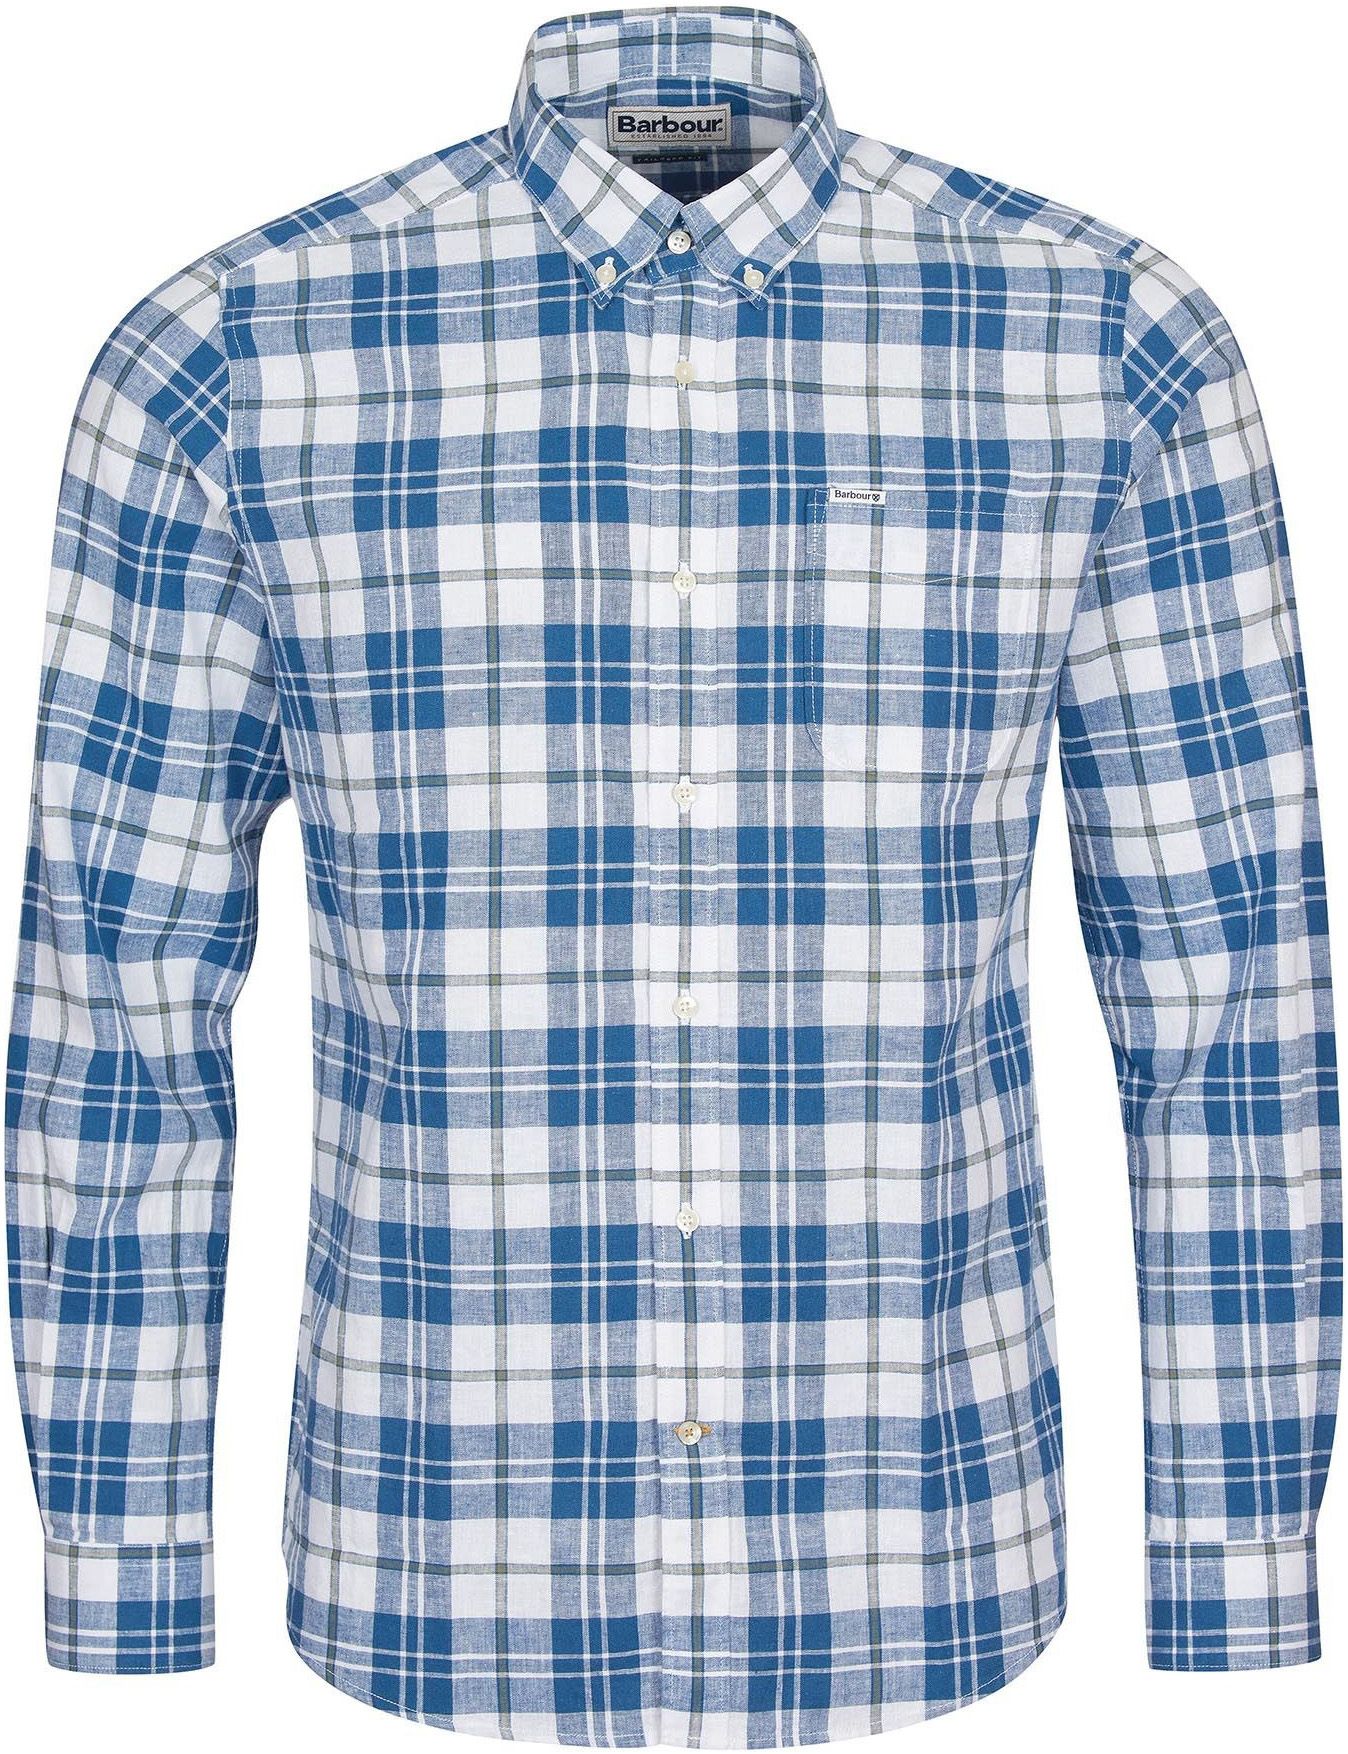 Barbour Thorpe Shirt Pane Blue size L